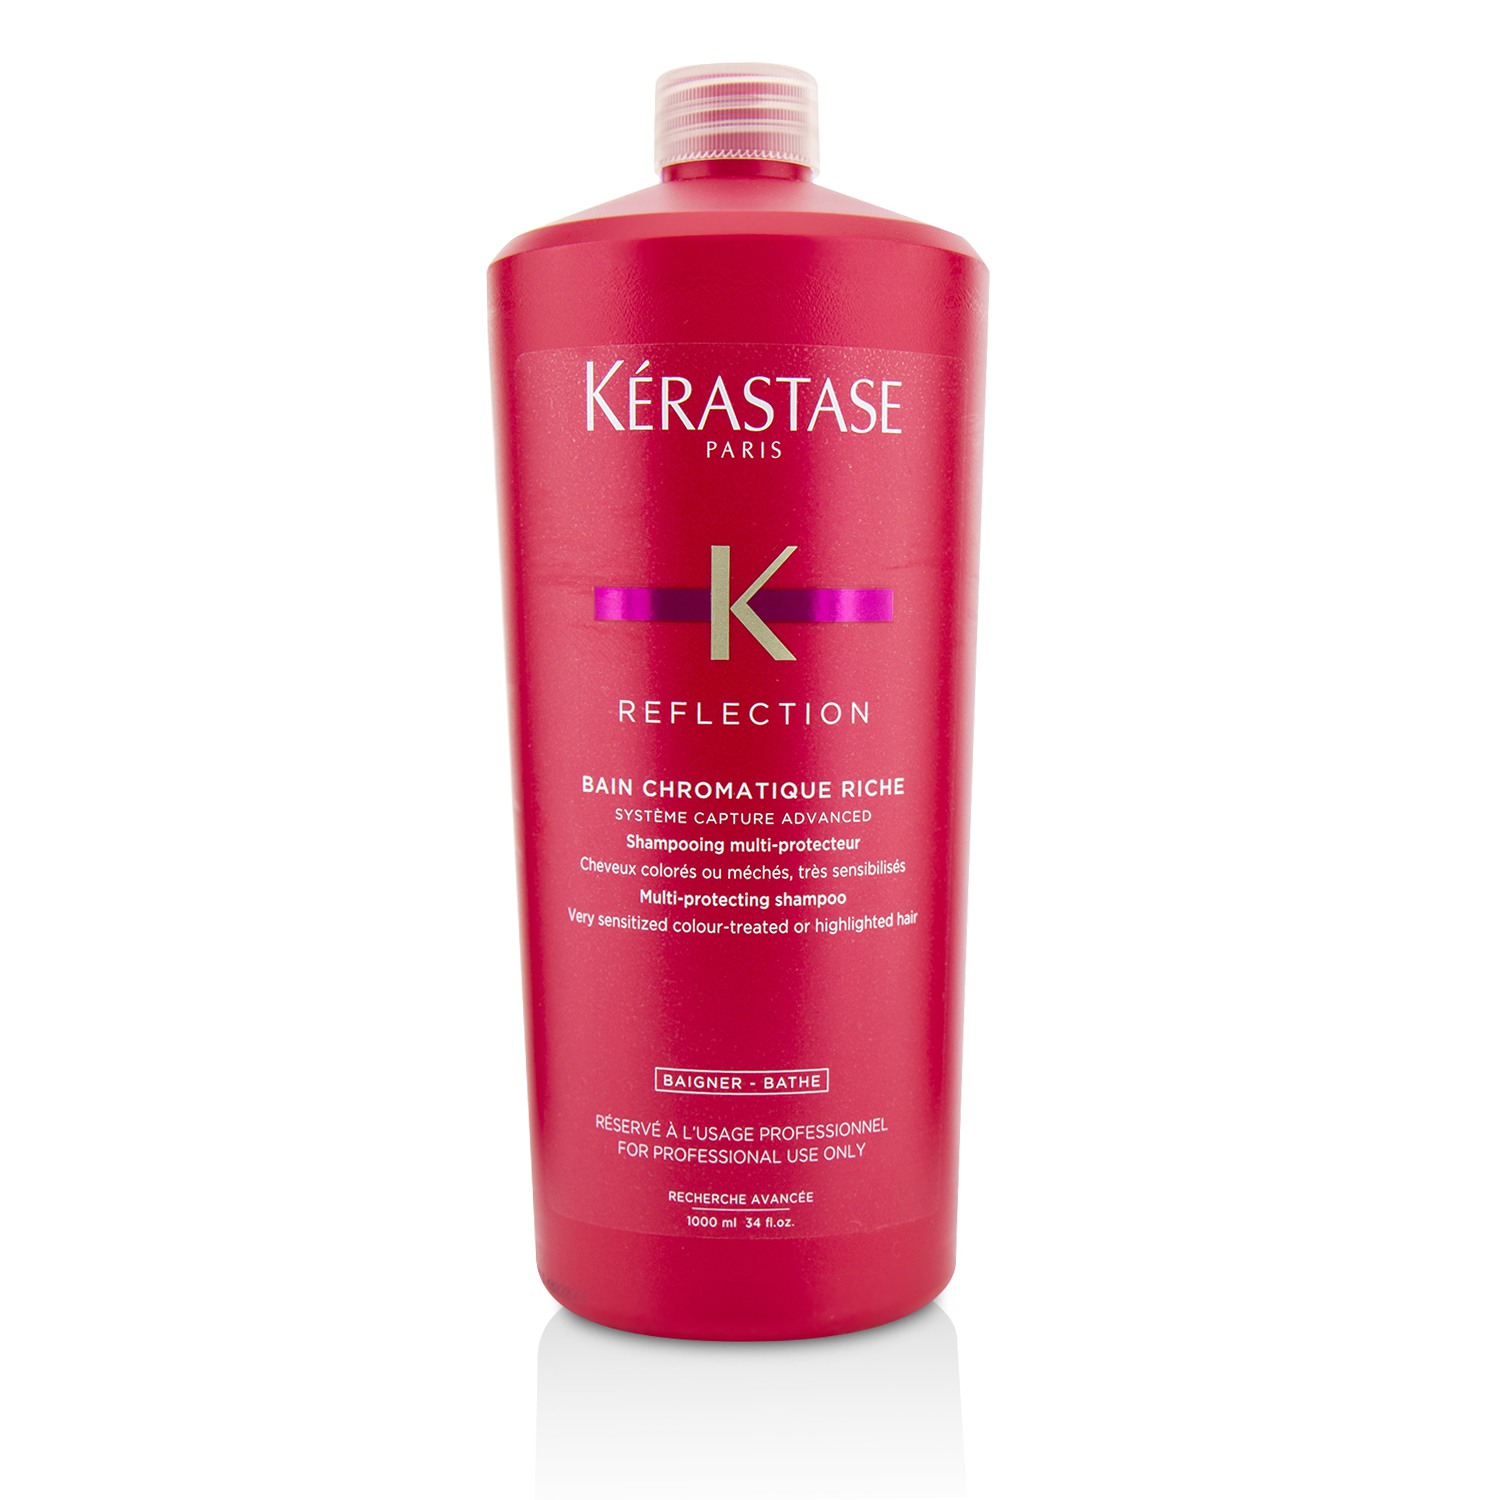 Reflection Bain Chromatique Riche Multi-Protecting Shampoo (Very Sensitized Colour-Treated or Highlighted Hair) Kerastase Image